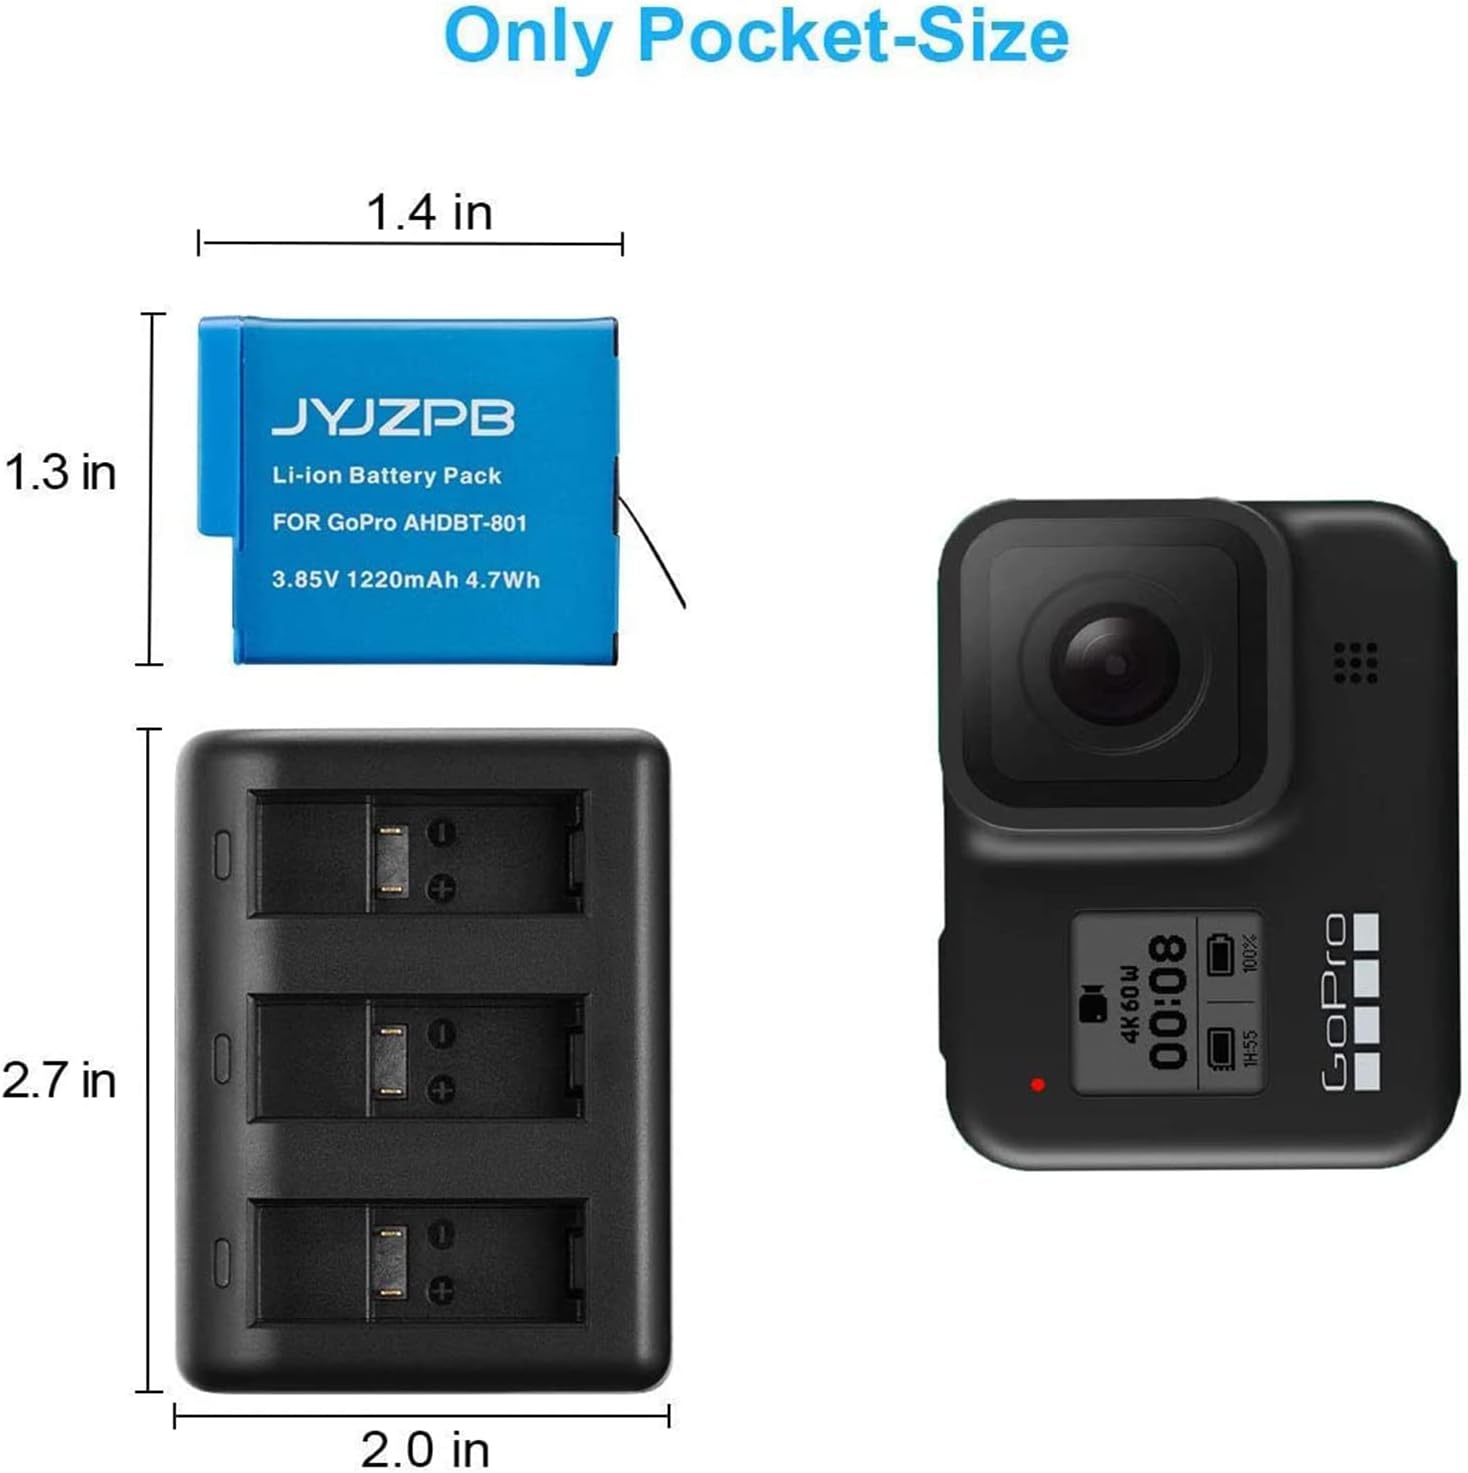 3 Packs JYJZPB Cameras Batteries for GoPro Hero 8 Battery Triple Fast